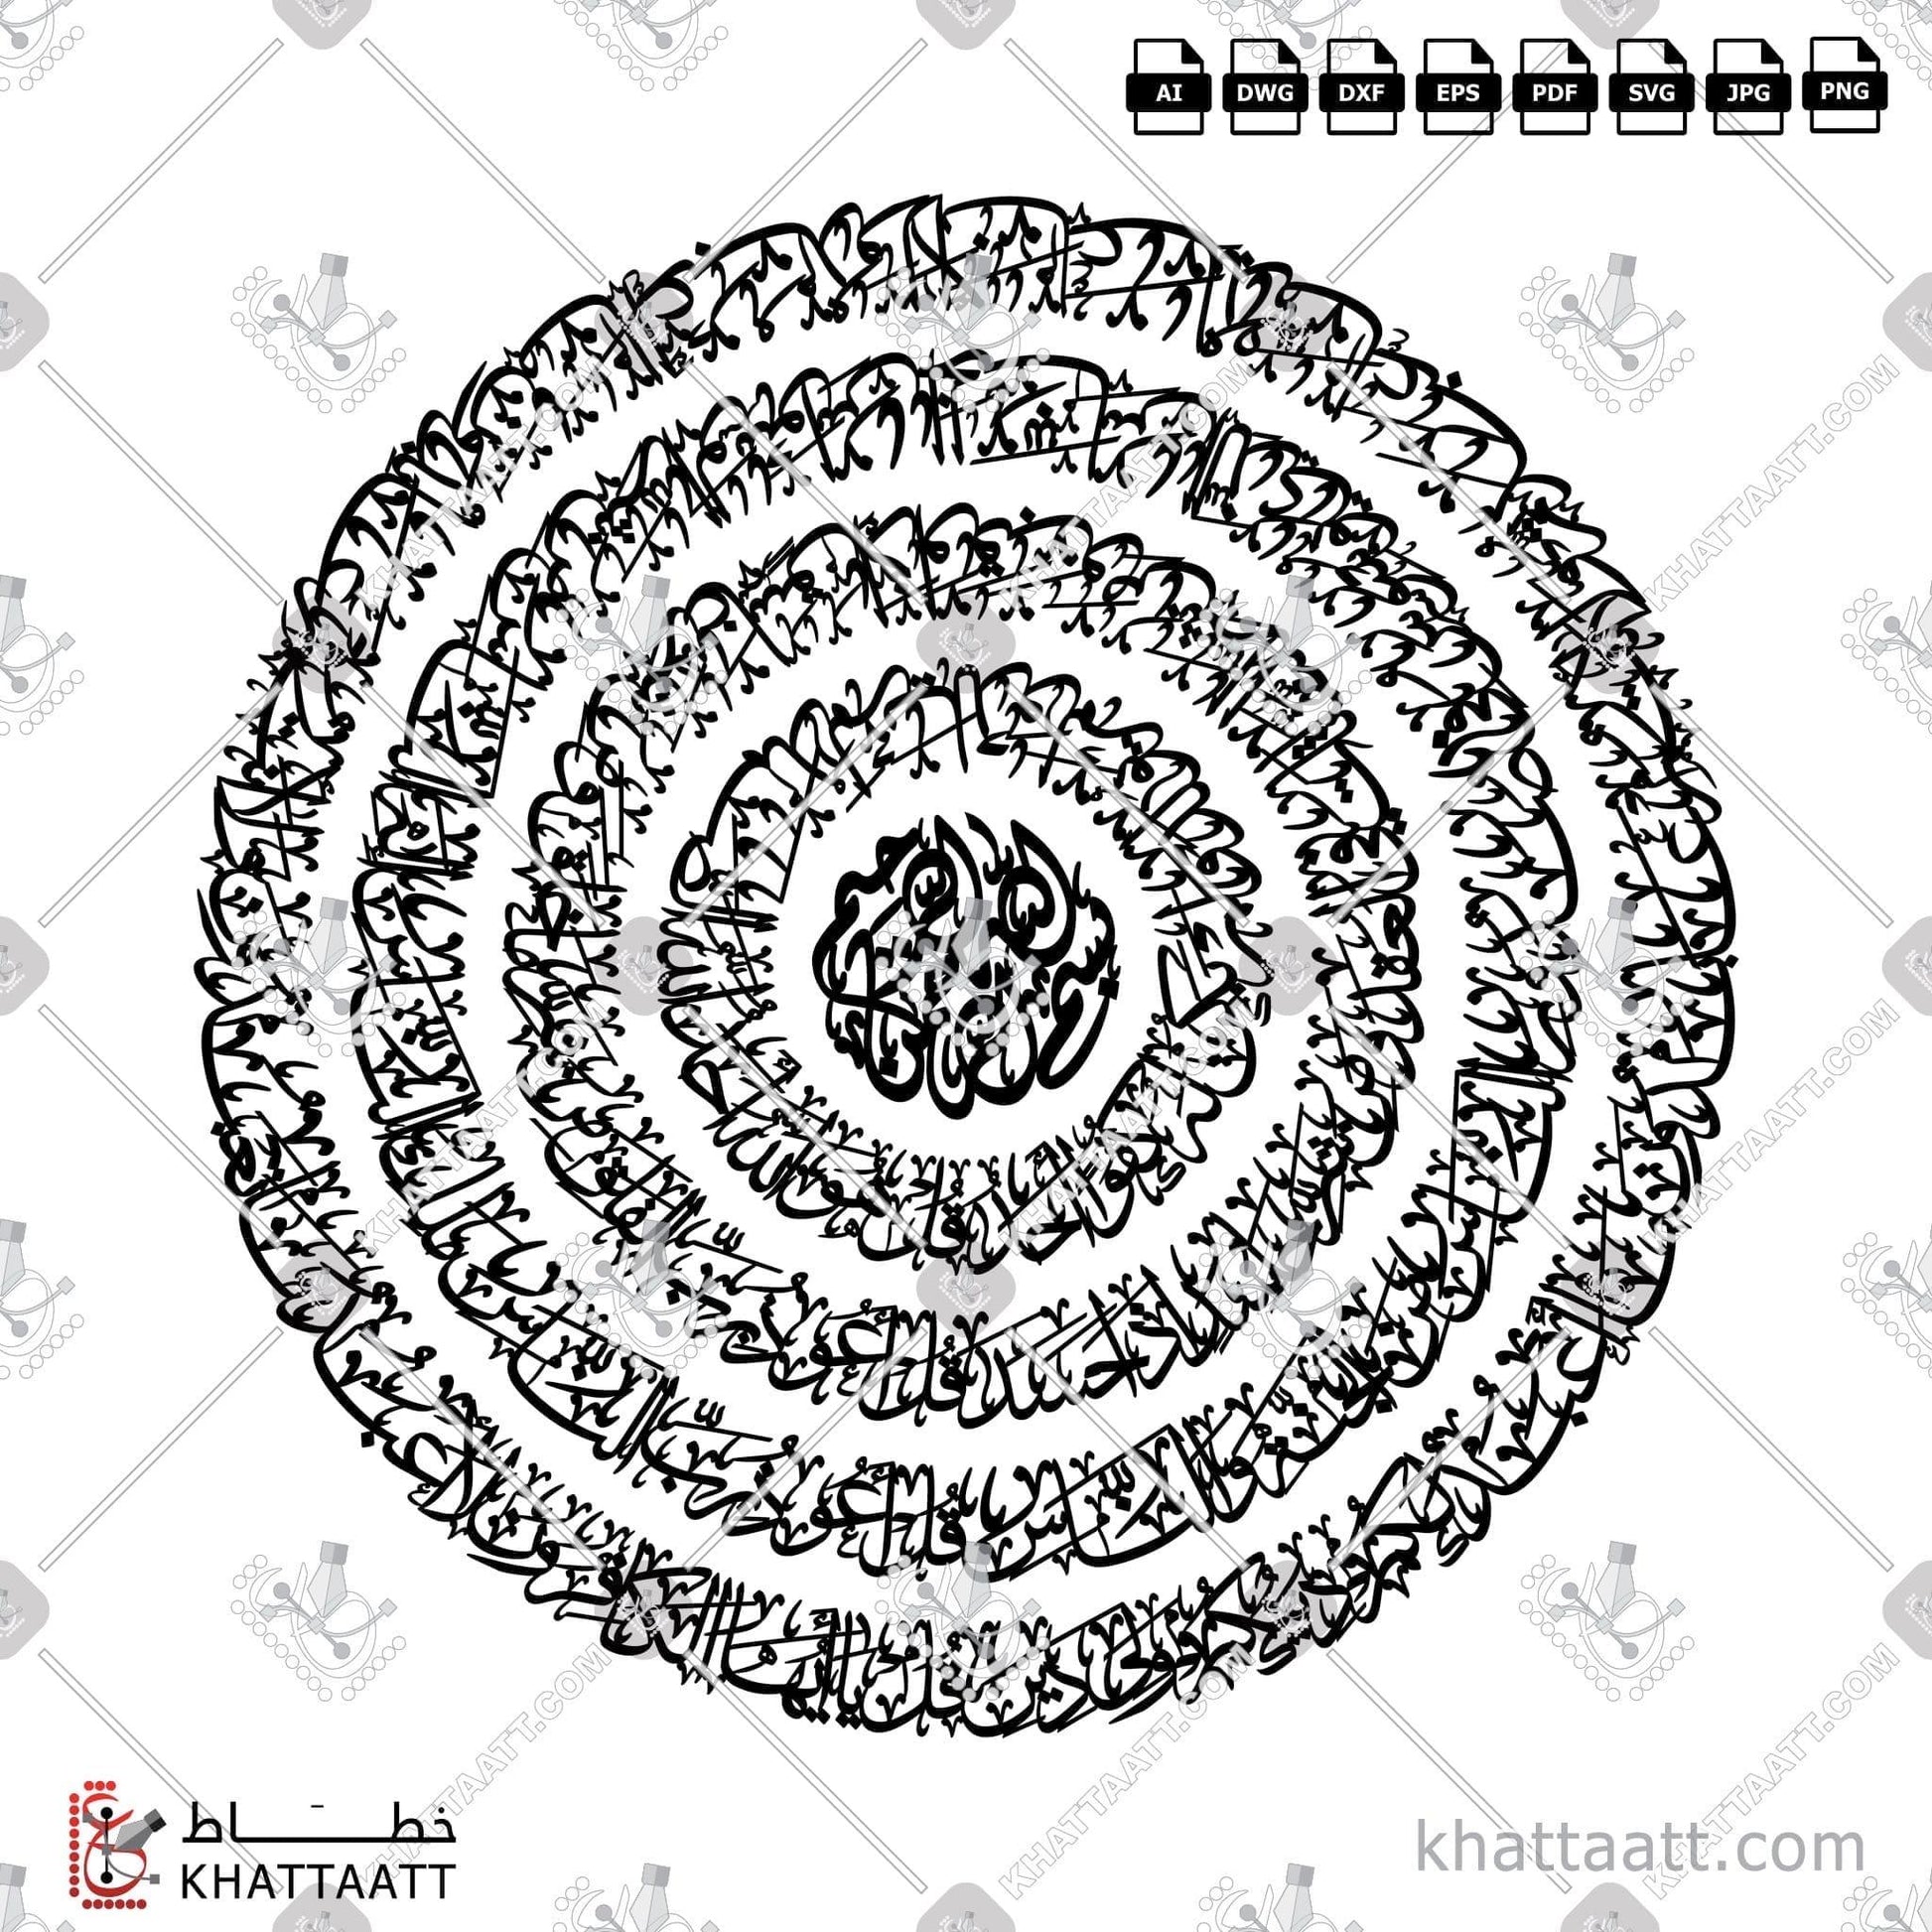 Download Arabic calligraphy تحميل مخطوطة خط عربي of The 4 Quls - القلاقل الأربعة (TC011) Thuluth - خط الثلث in vector فيكتور and png